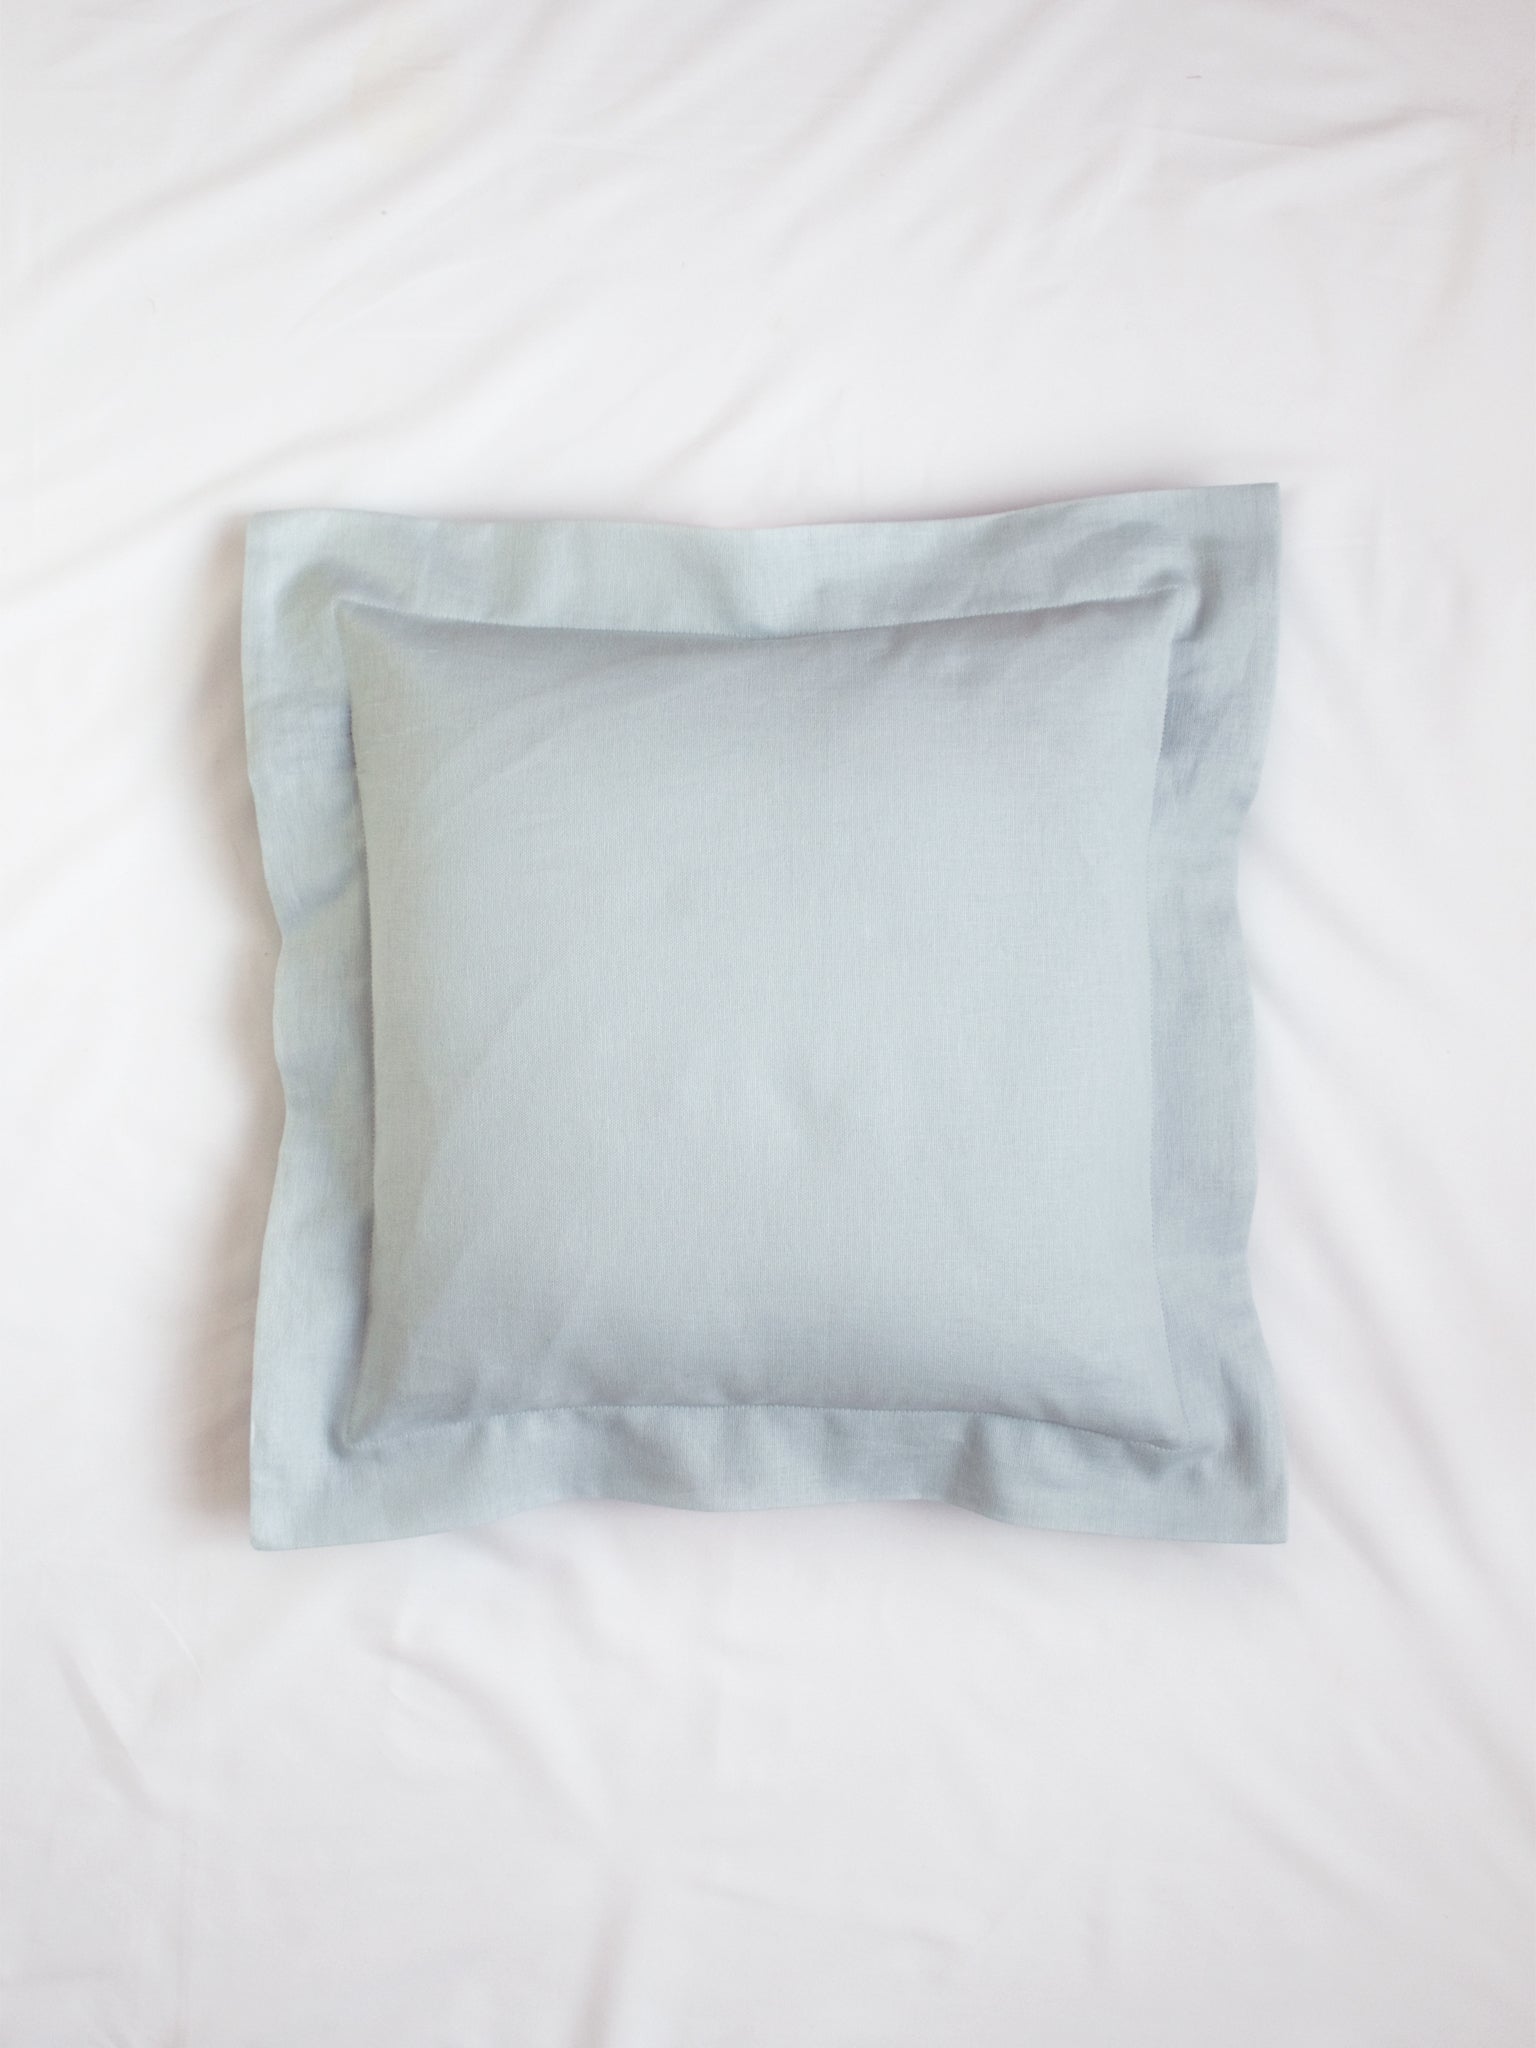 A light blue cotton linen cushion on the centre of a white bedsheet.